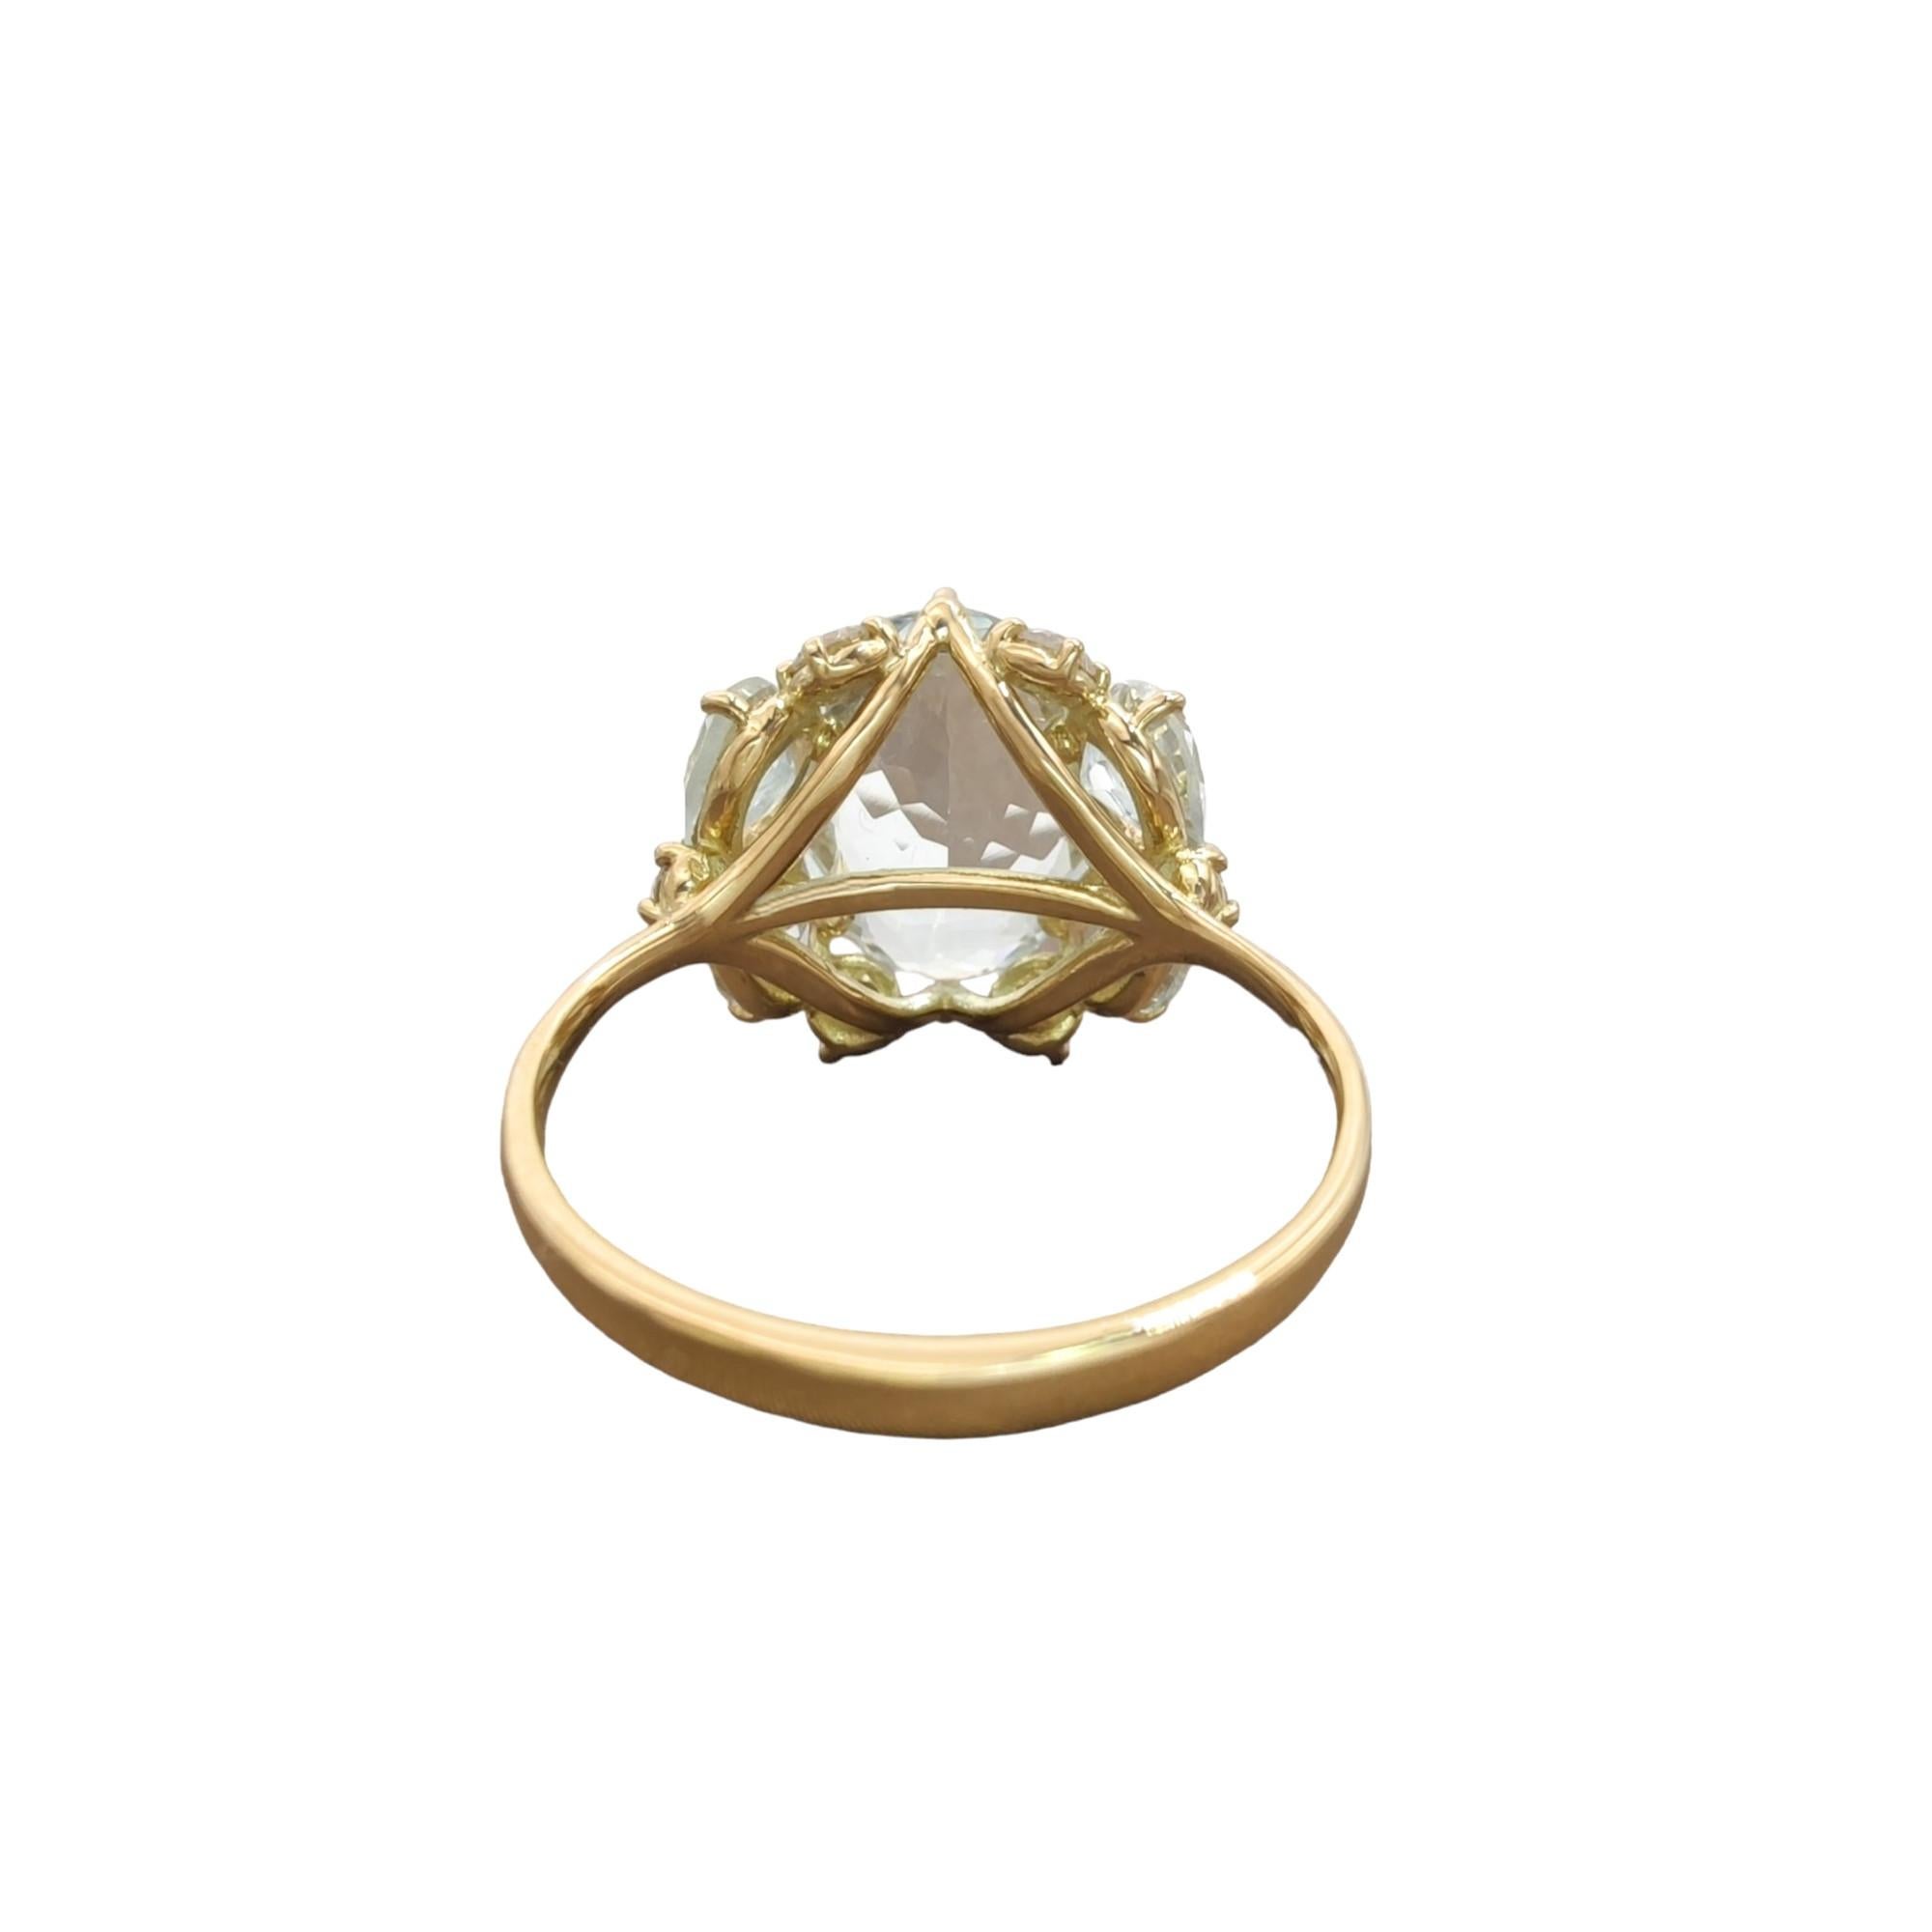 2, 69ct Oval Cut Aquamarine Engagement Ring, 18k Yellow Gold, Resizable 5